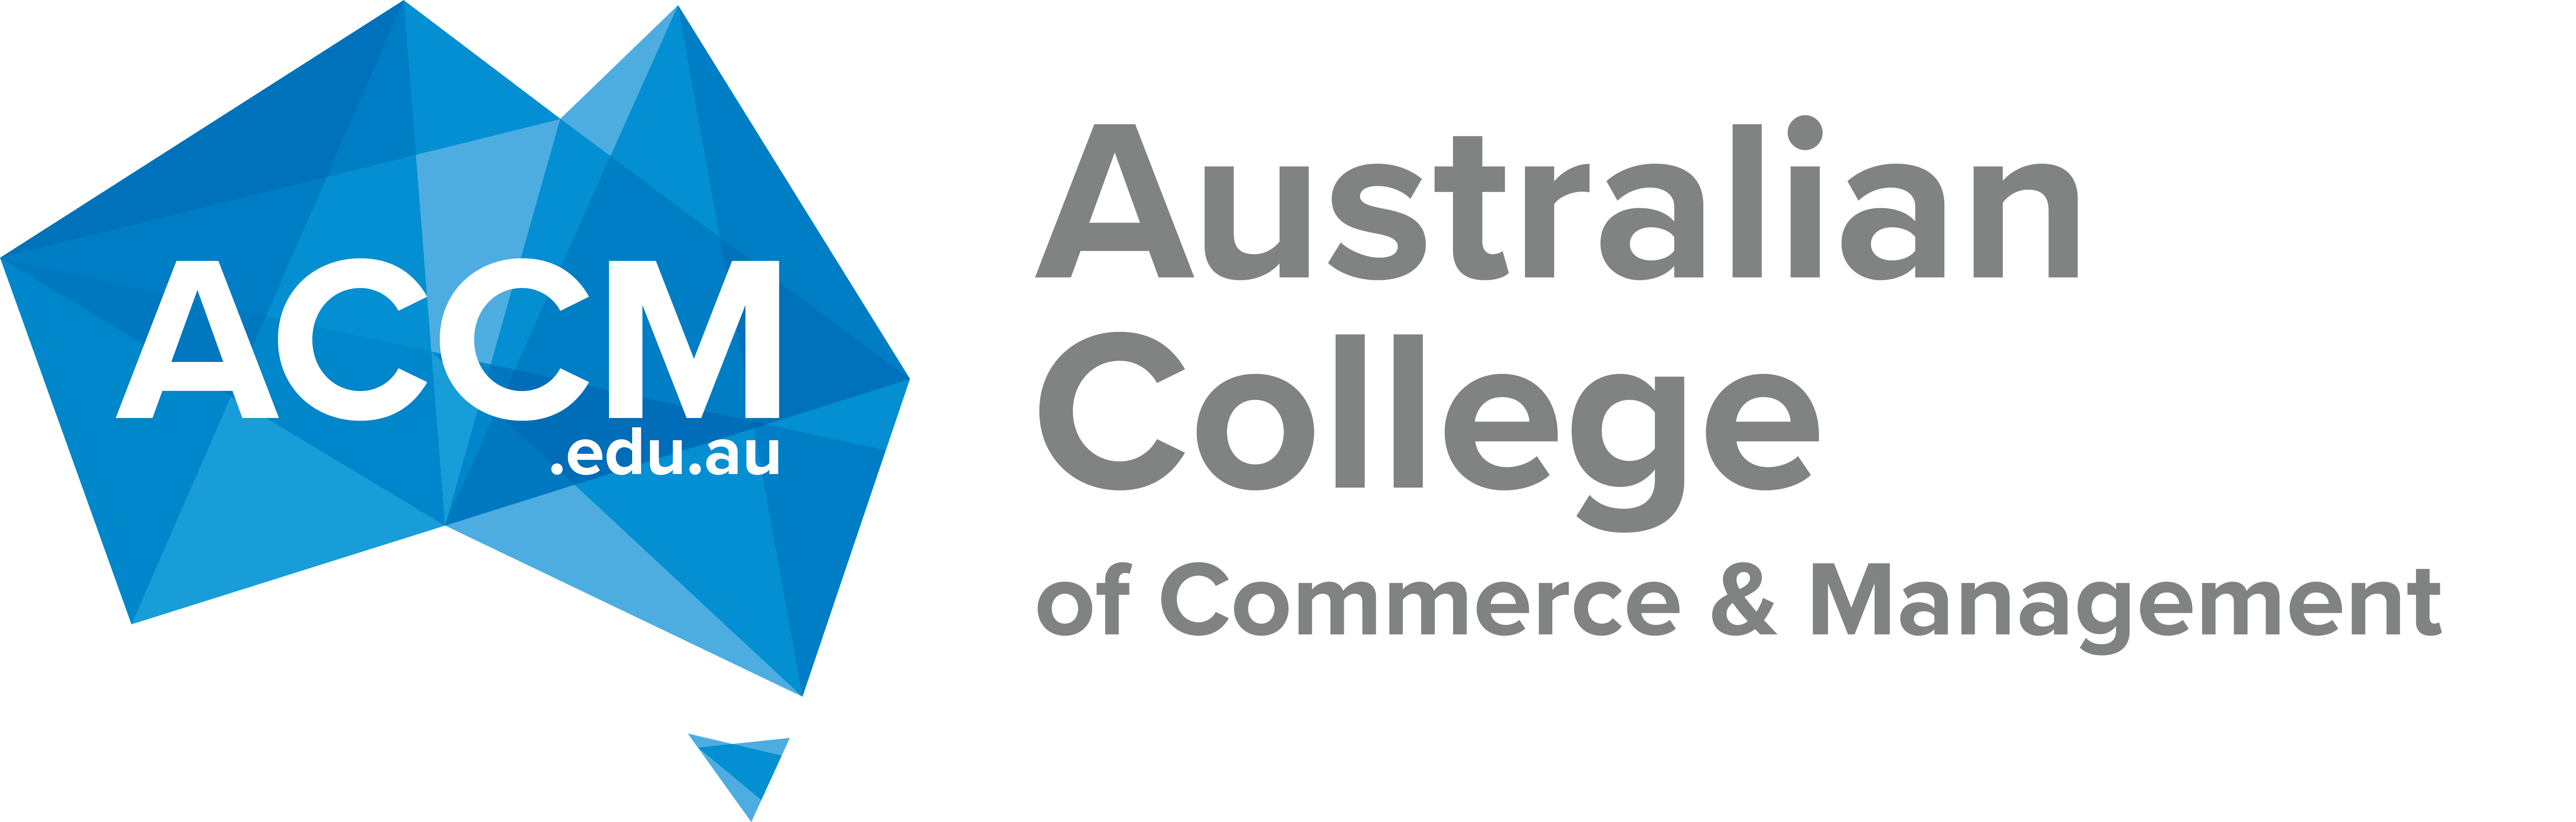 ACCM Logo 2021 export v3